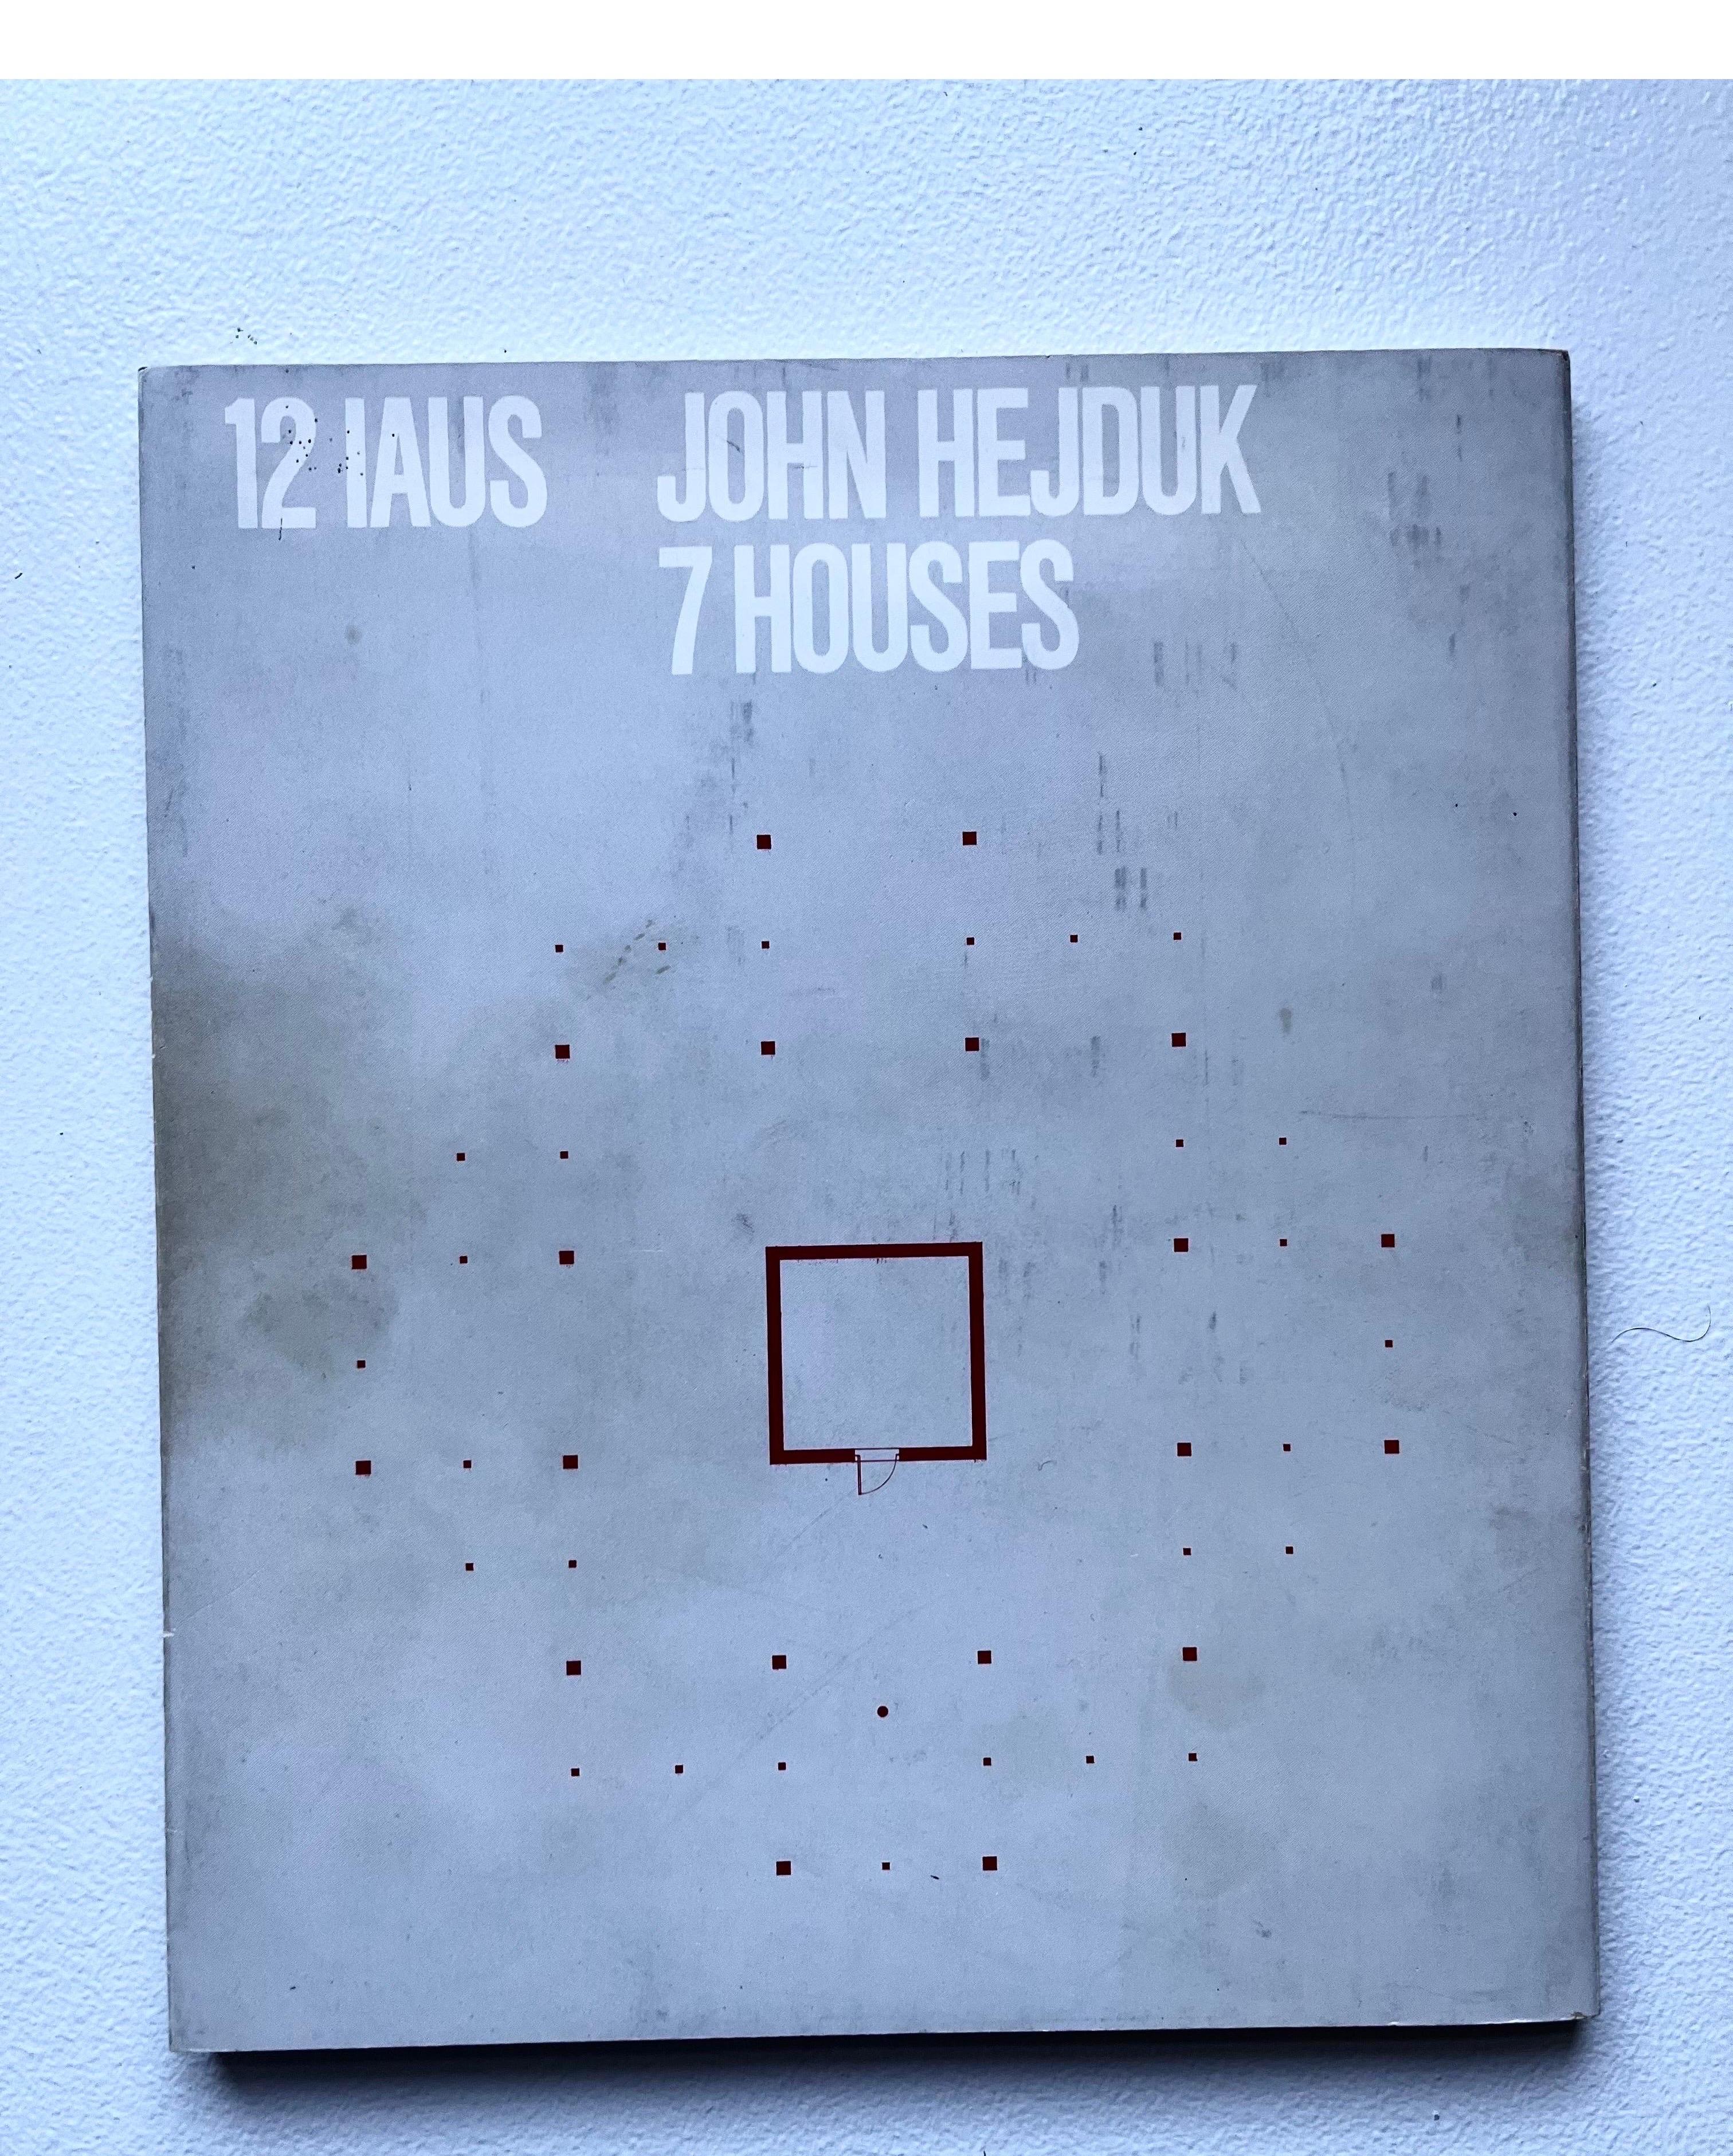 7 Houses - John Hejduk - first edition - 1980.
